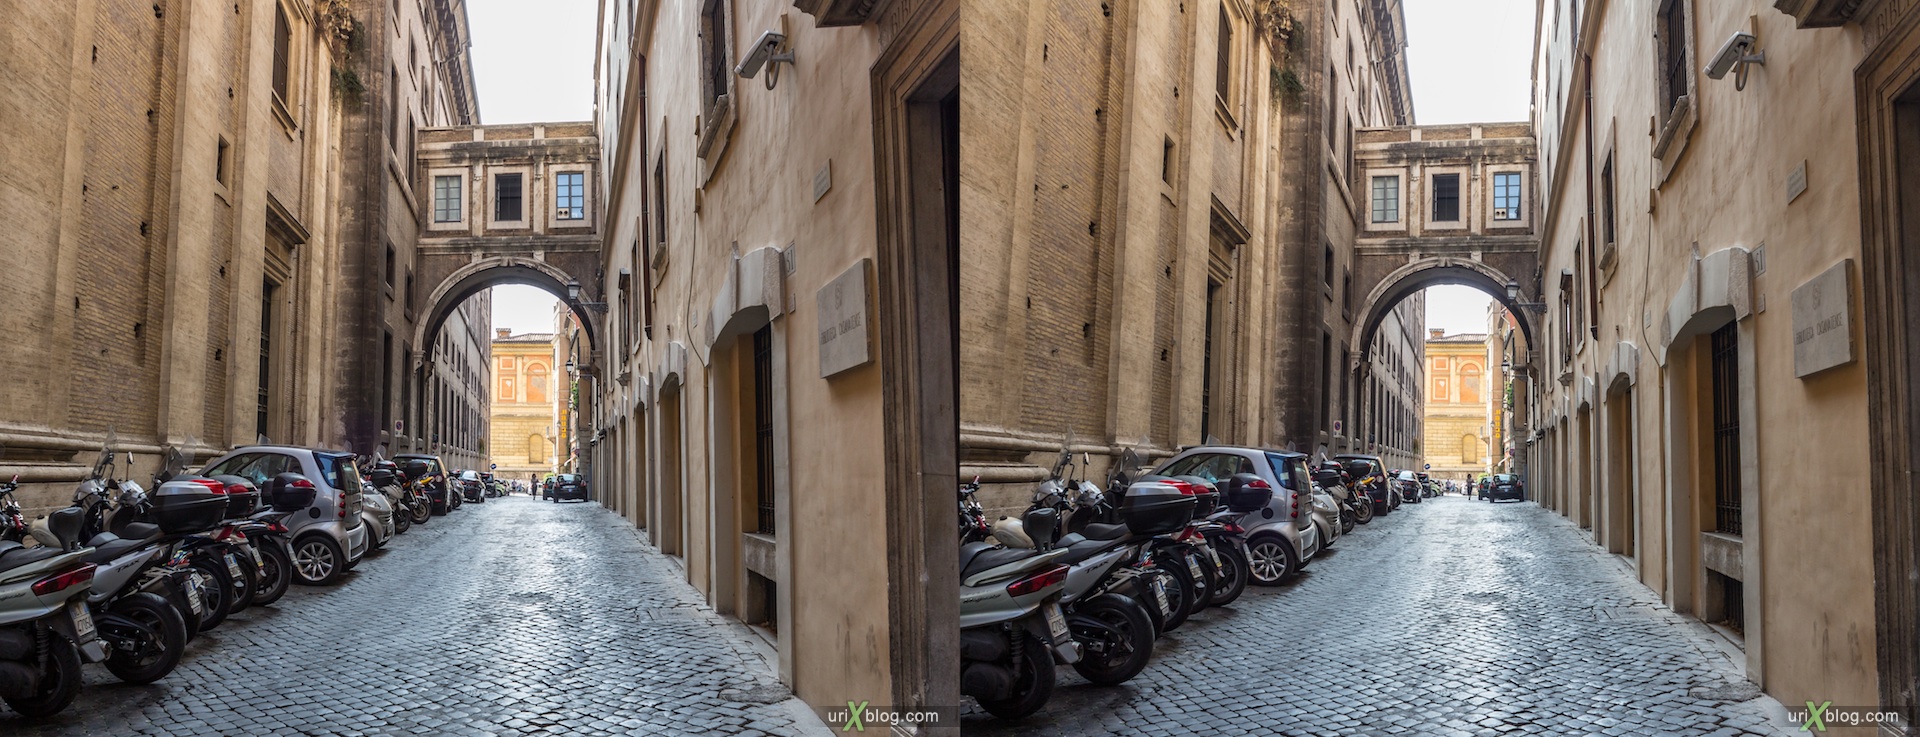 2012, Via di Sant'Ignazio street, Rome, Italy, 3D, stereo pair, cross-eyed, crossview, cross view stereo pair